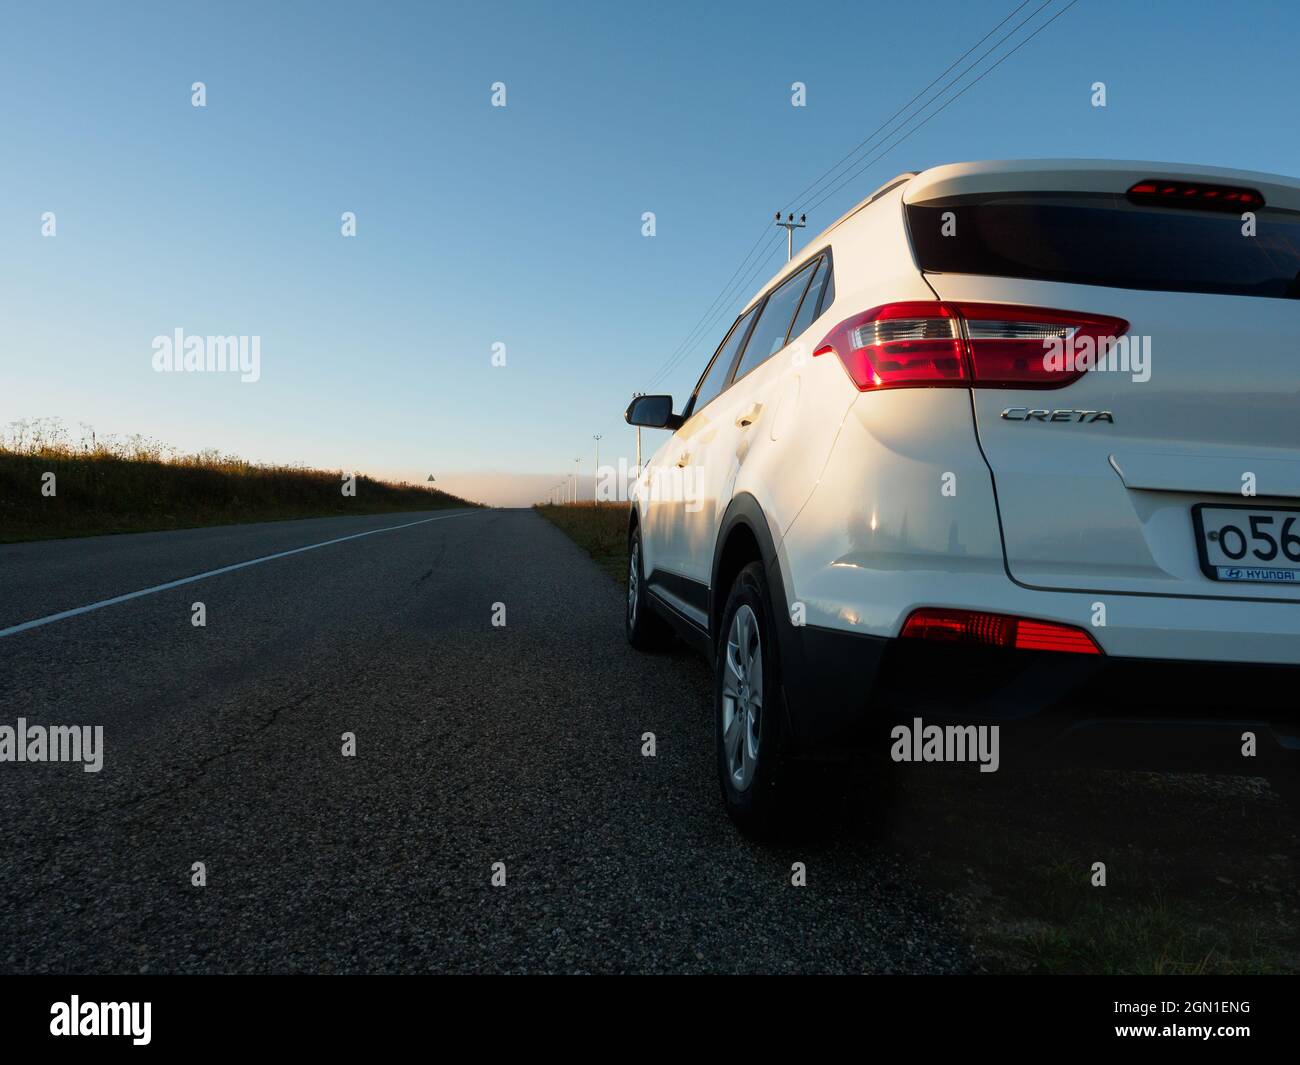 North Caucasus, Russia - 09 08 2021: SUV car on the road throught the fields at sunrise. Hyundai Creta Stock Photo